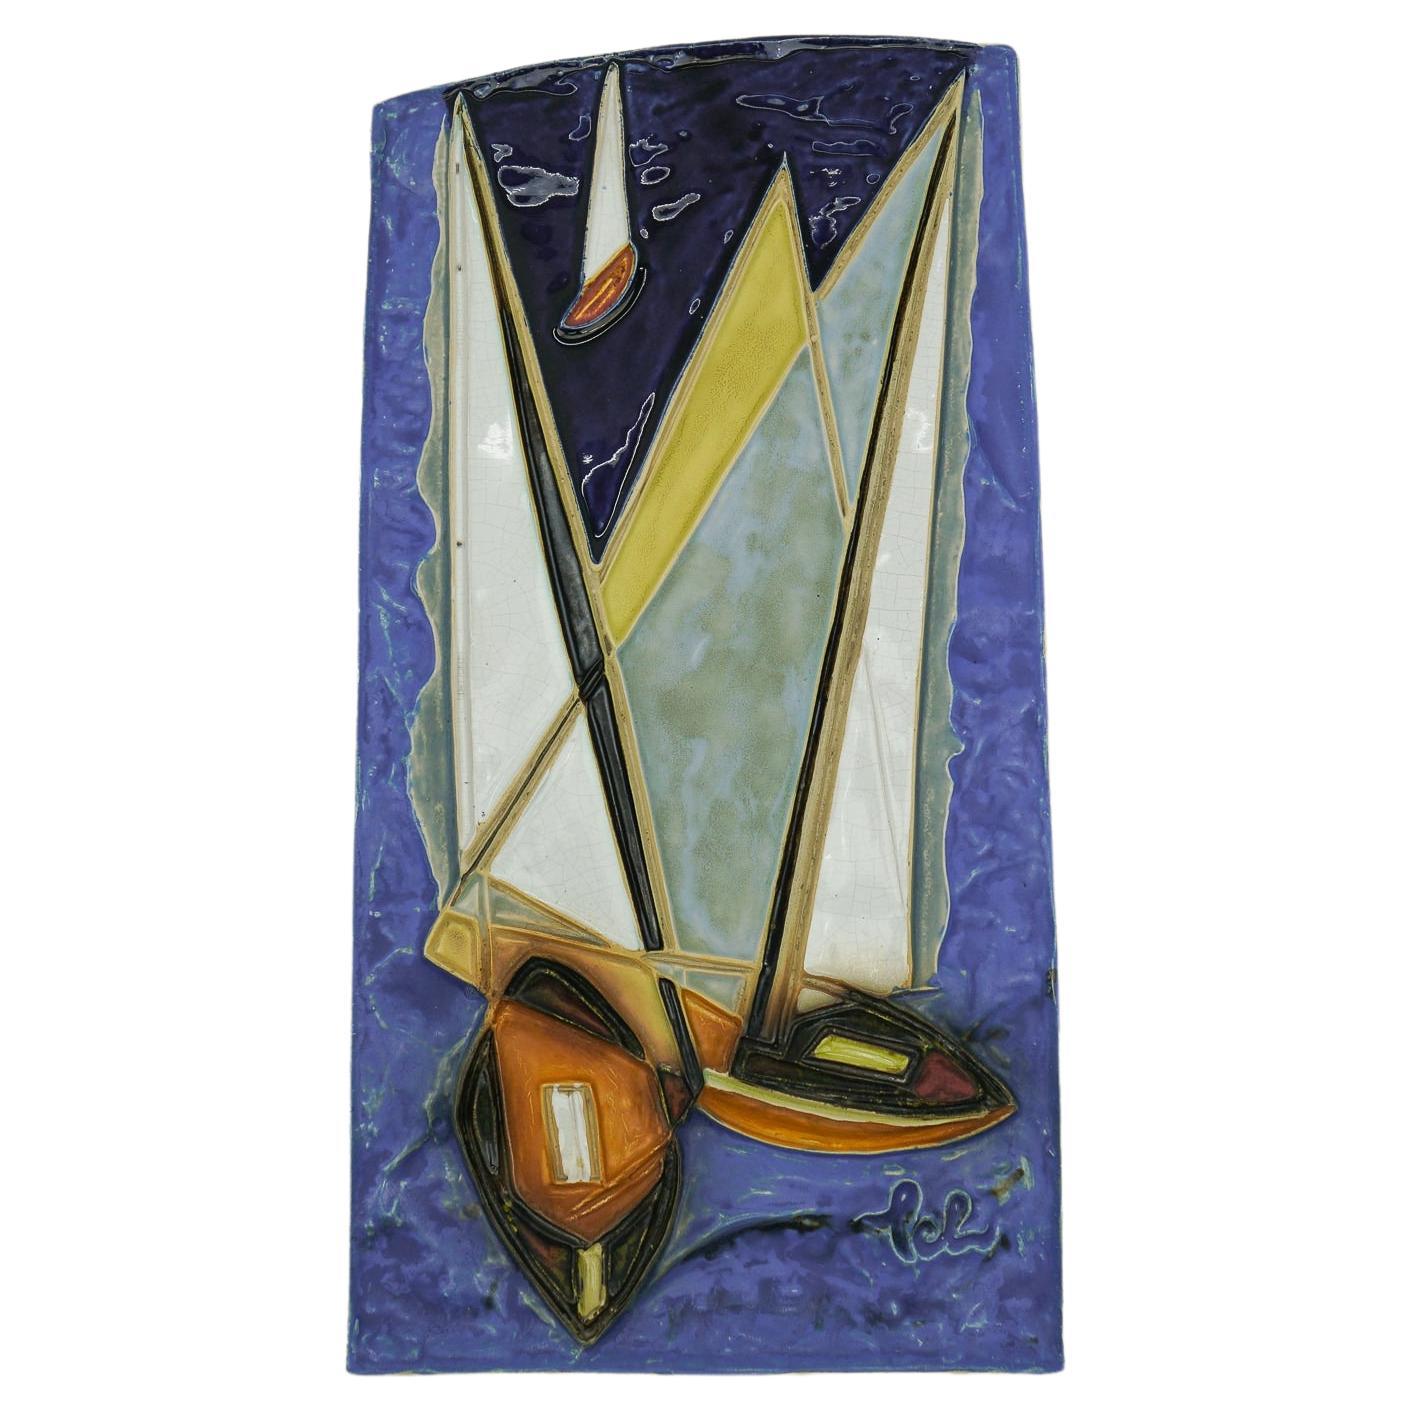 Mid-Century Modern Ceramic Relief Tile Plaque "Sailing" by Helmut Schaffenacker For Sale